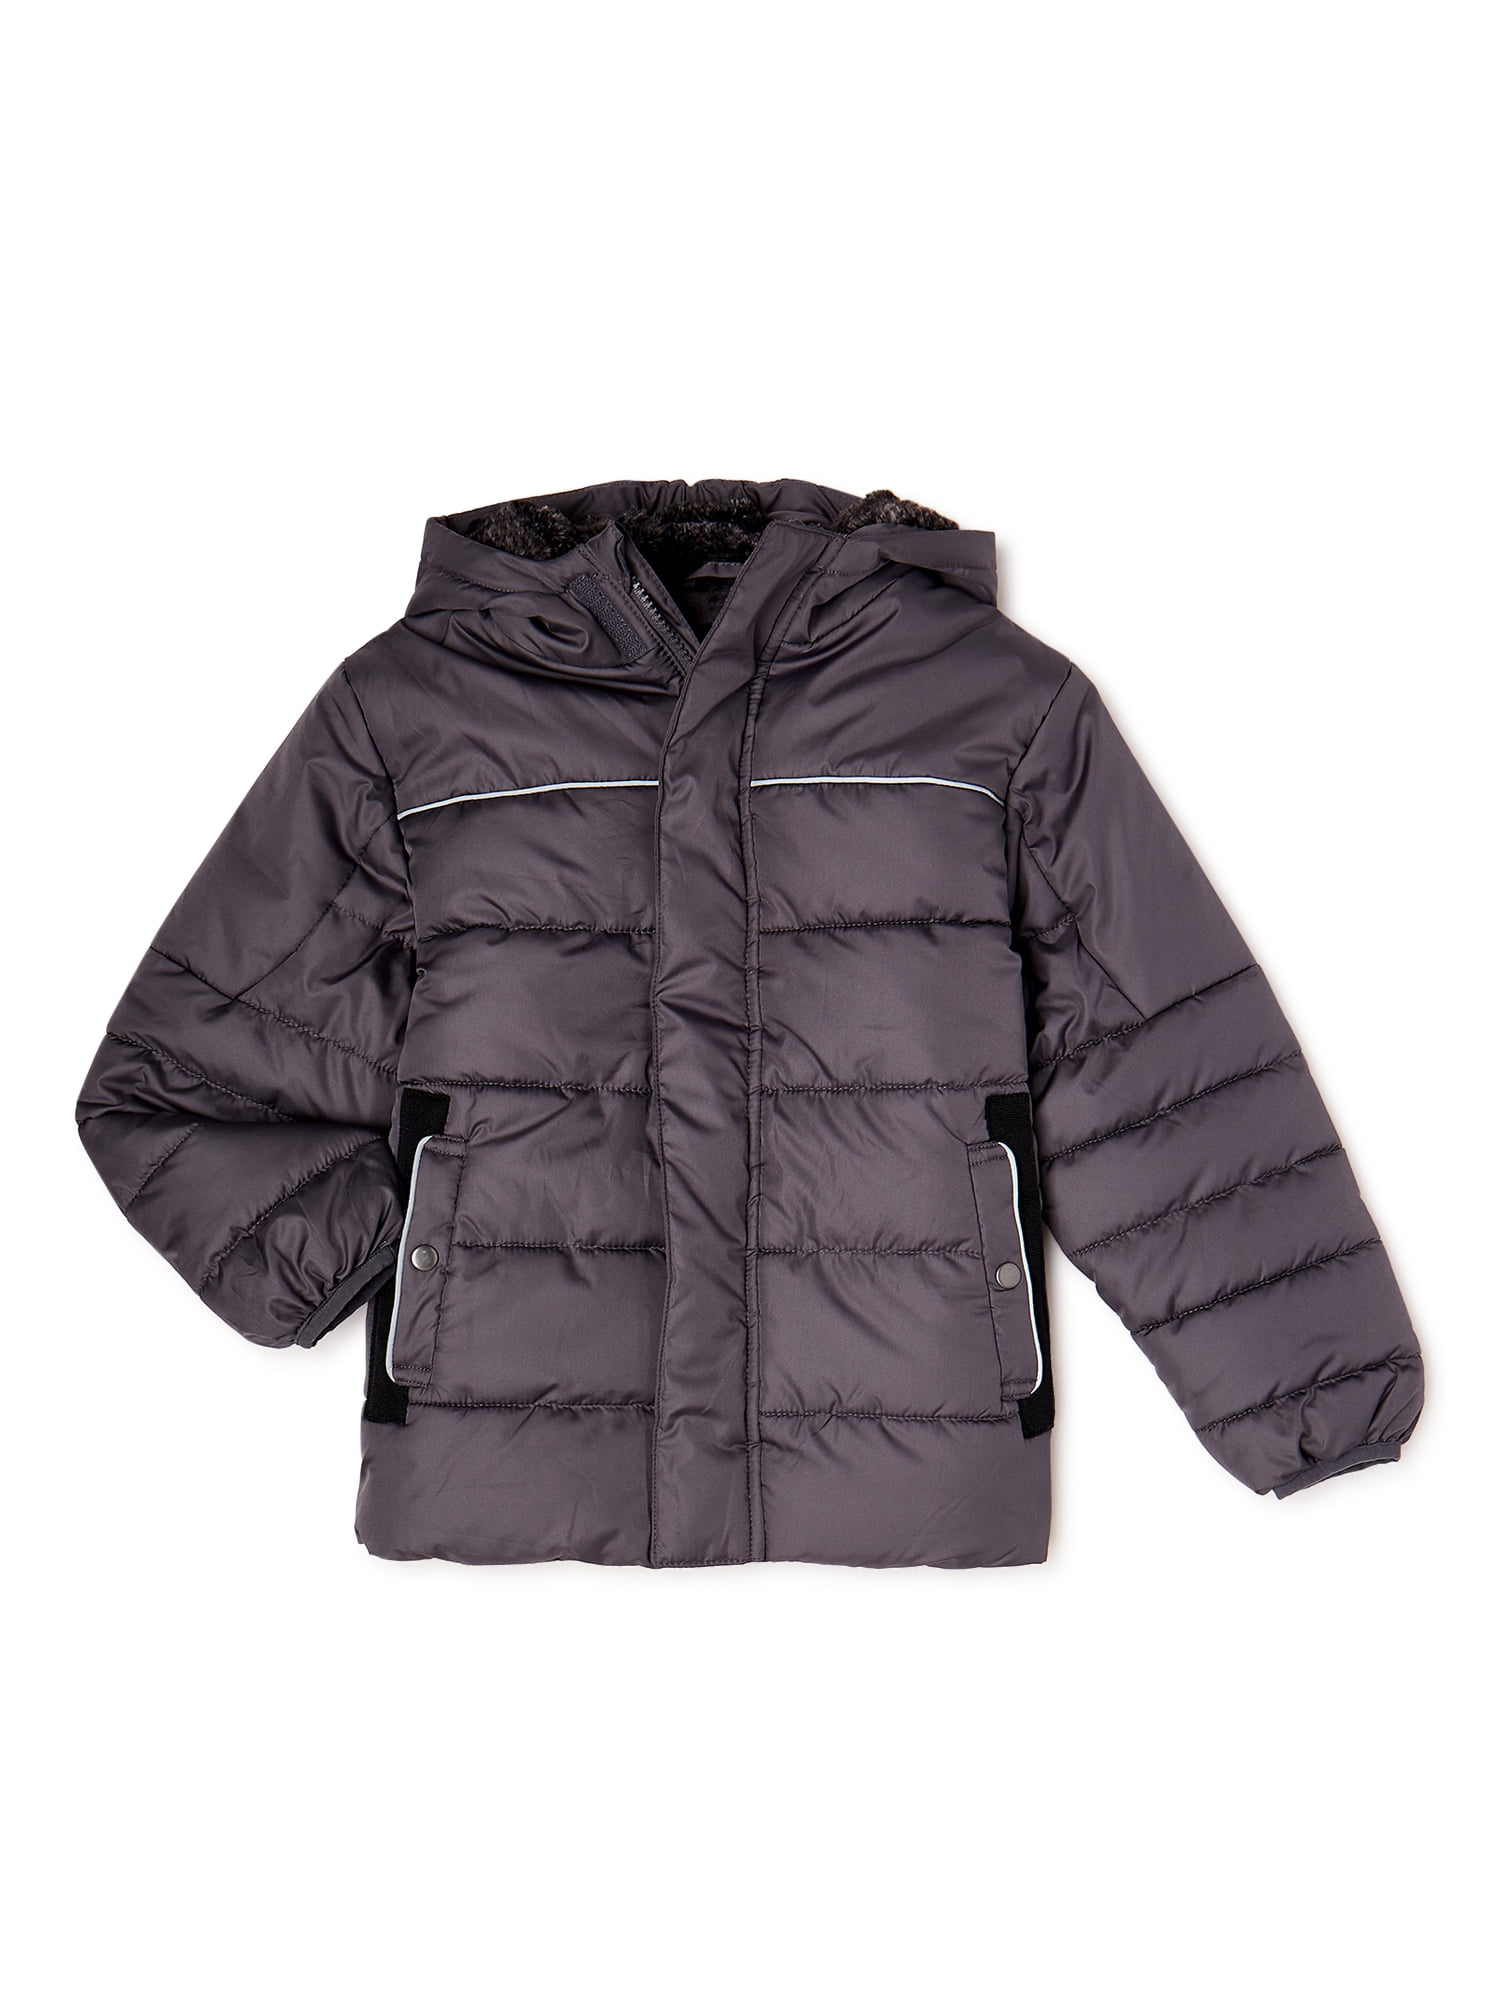 Swiss Tech Boys' Puffer Jacket with Hood, Sizes 4-18 - Walmart.com